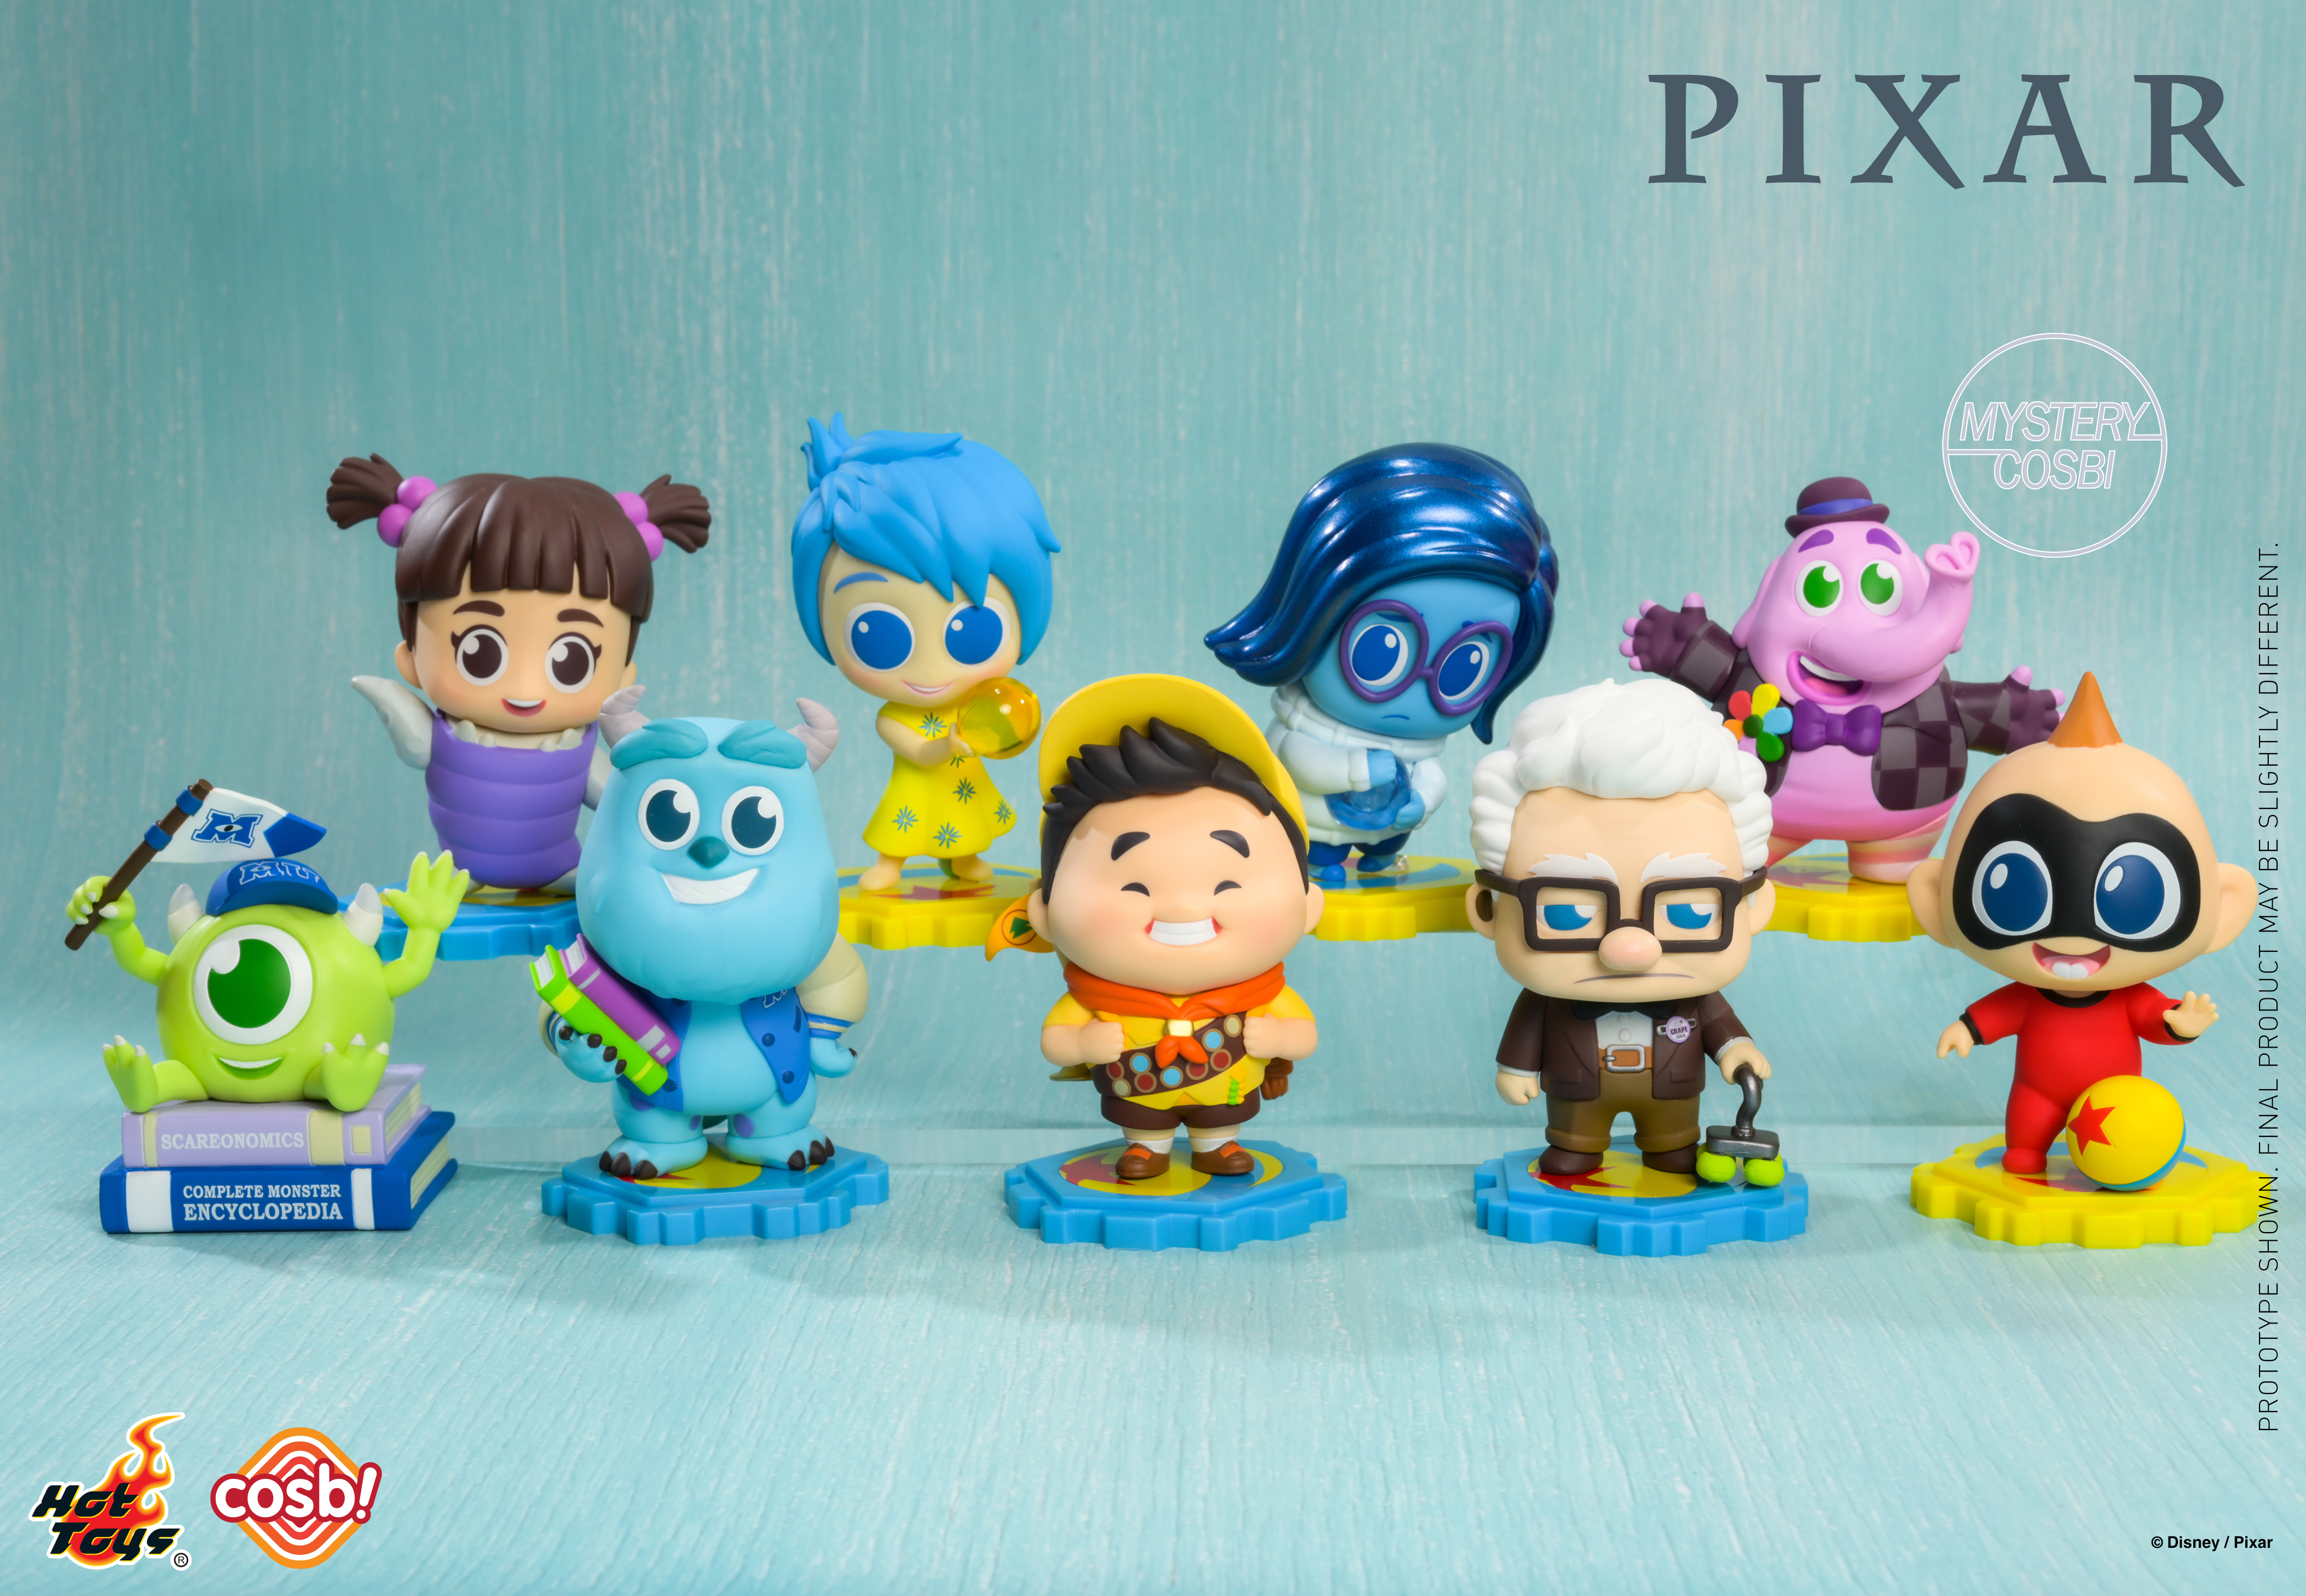 Hot Toys - Pixar Cosbi_PR2